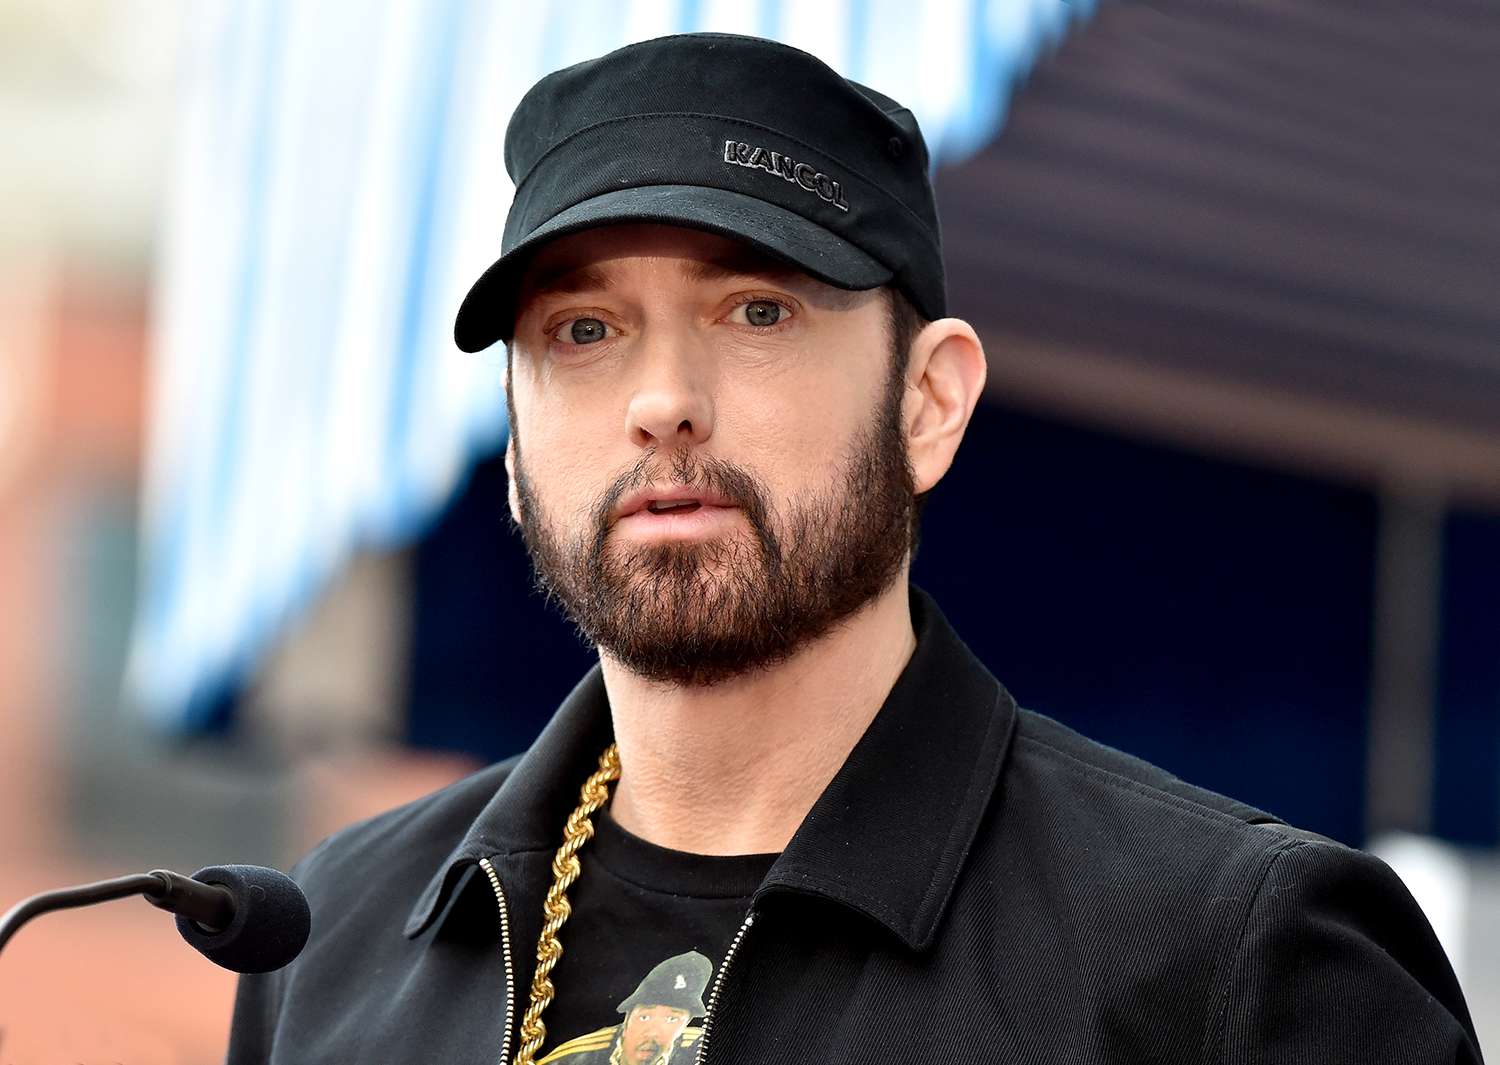 Eminem wearing a black coat and top